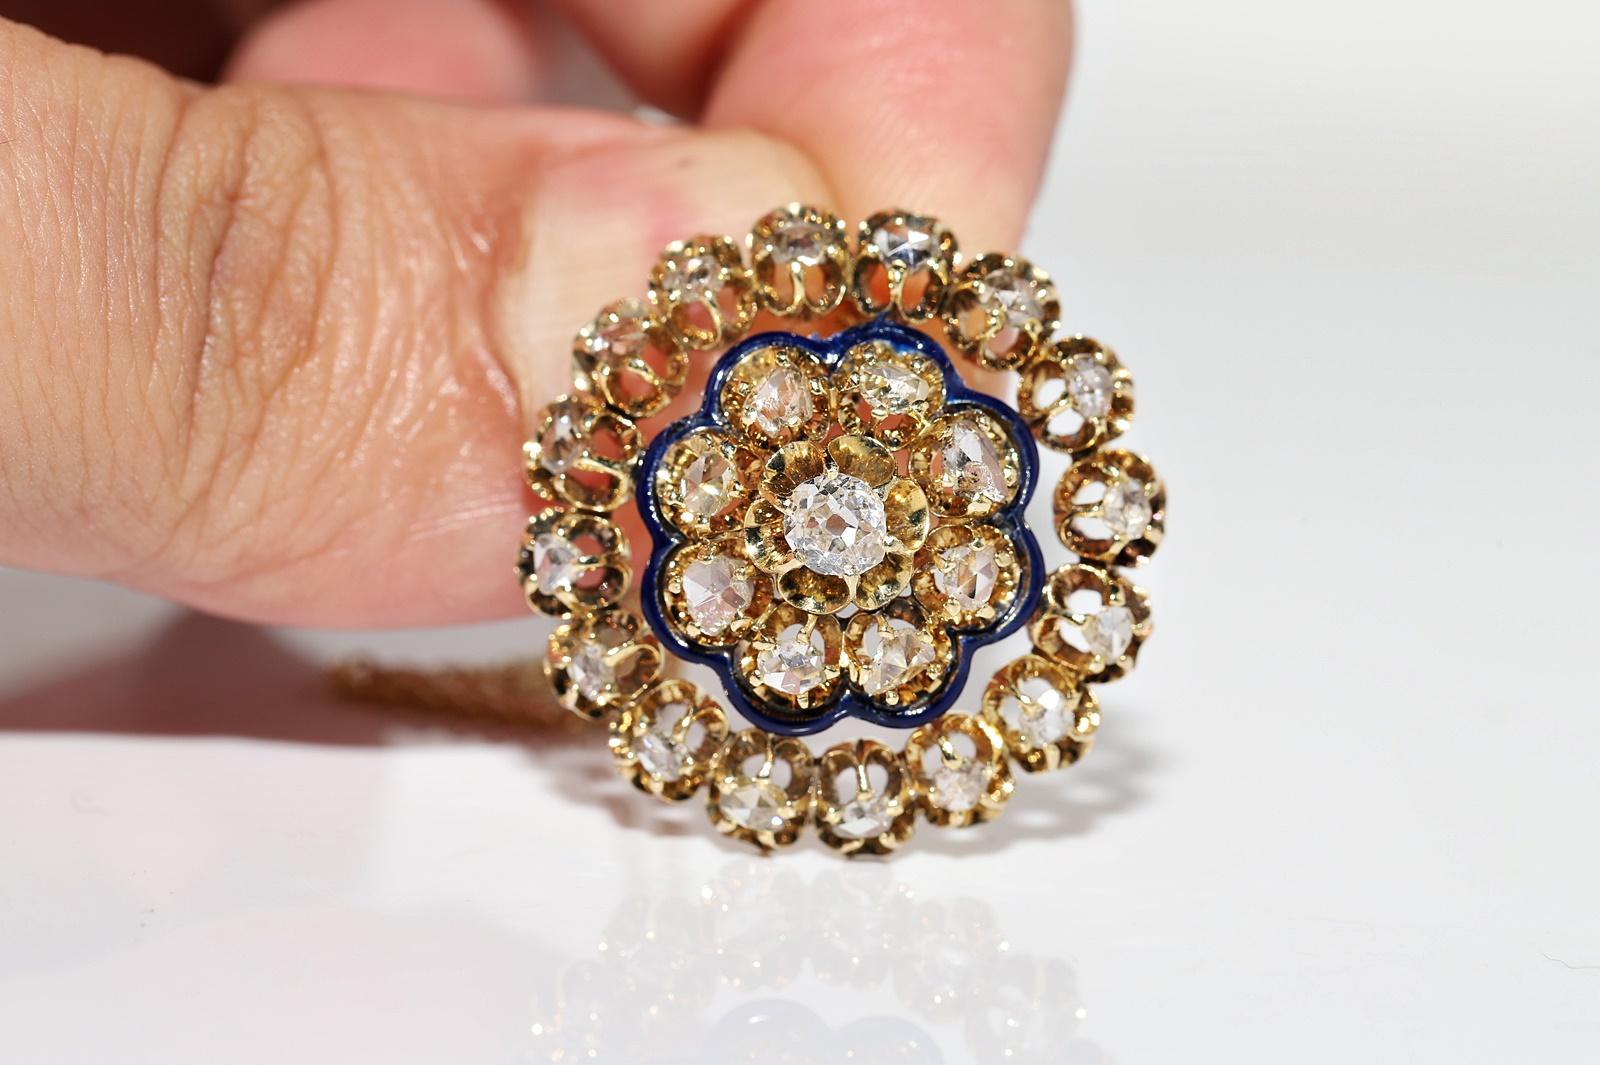 Antique Circa 1900s 18k Gold Natural Diamond And Enamel Pendant Necklace For Sale 3